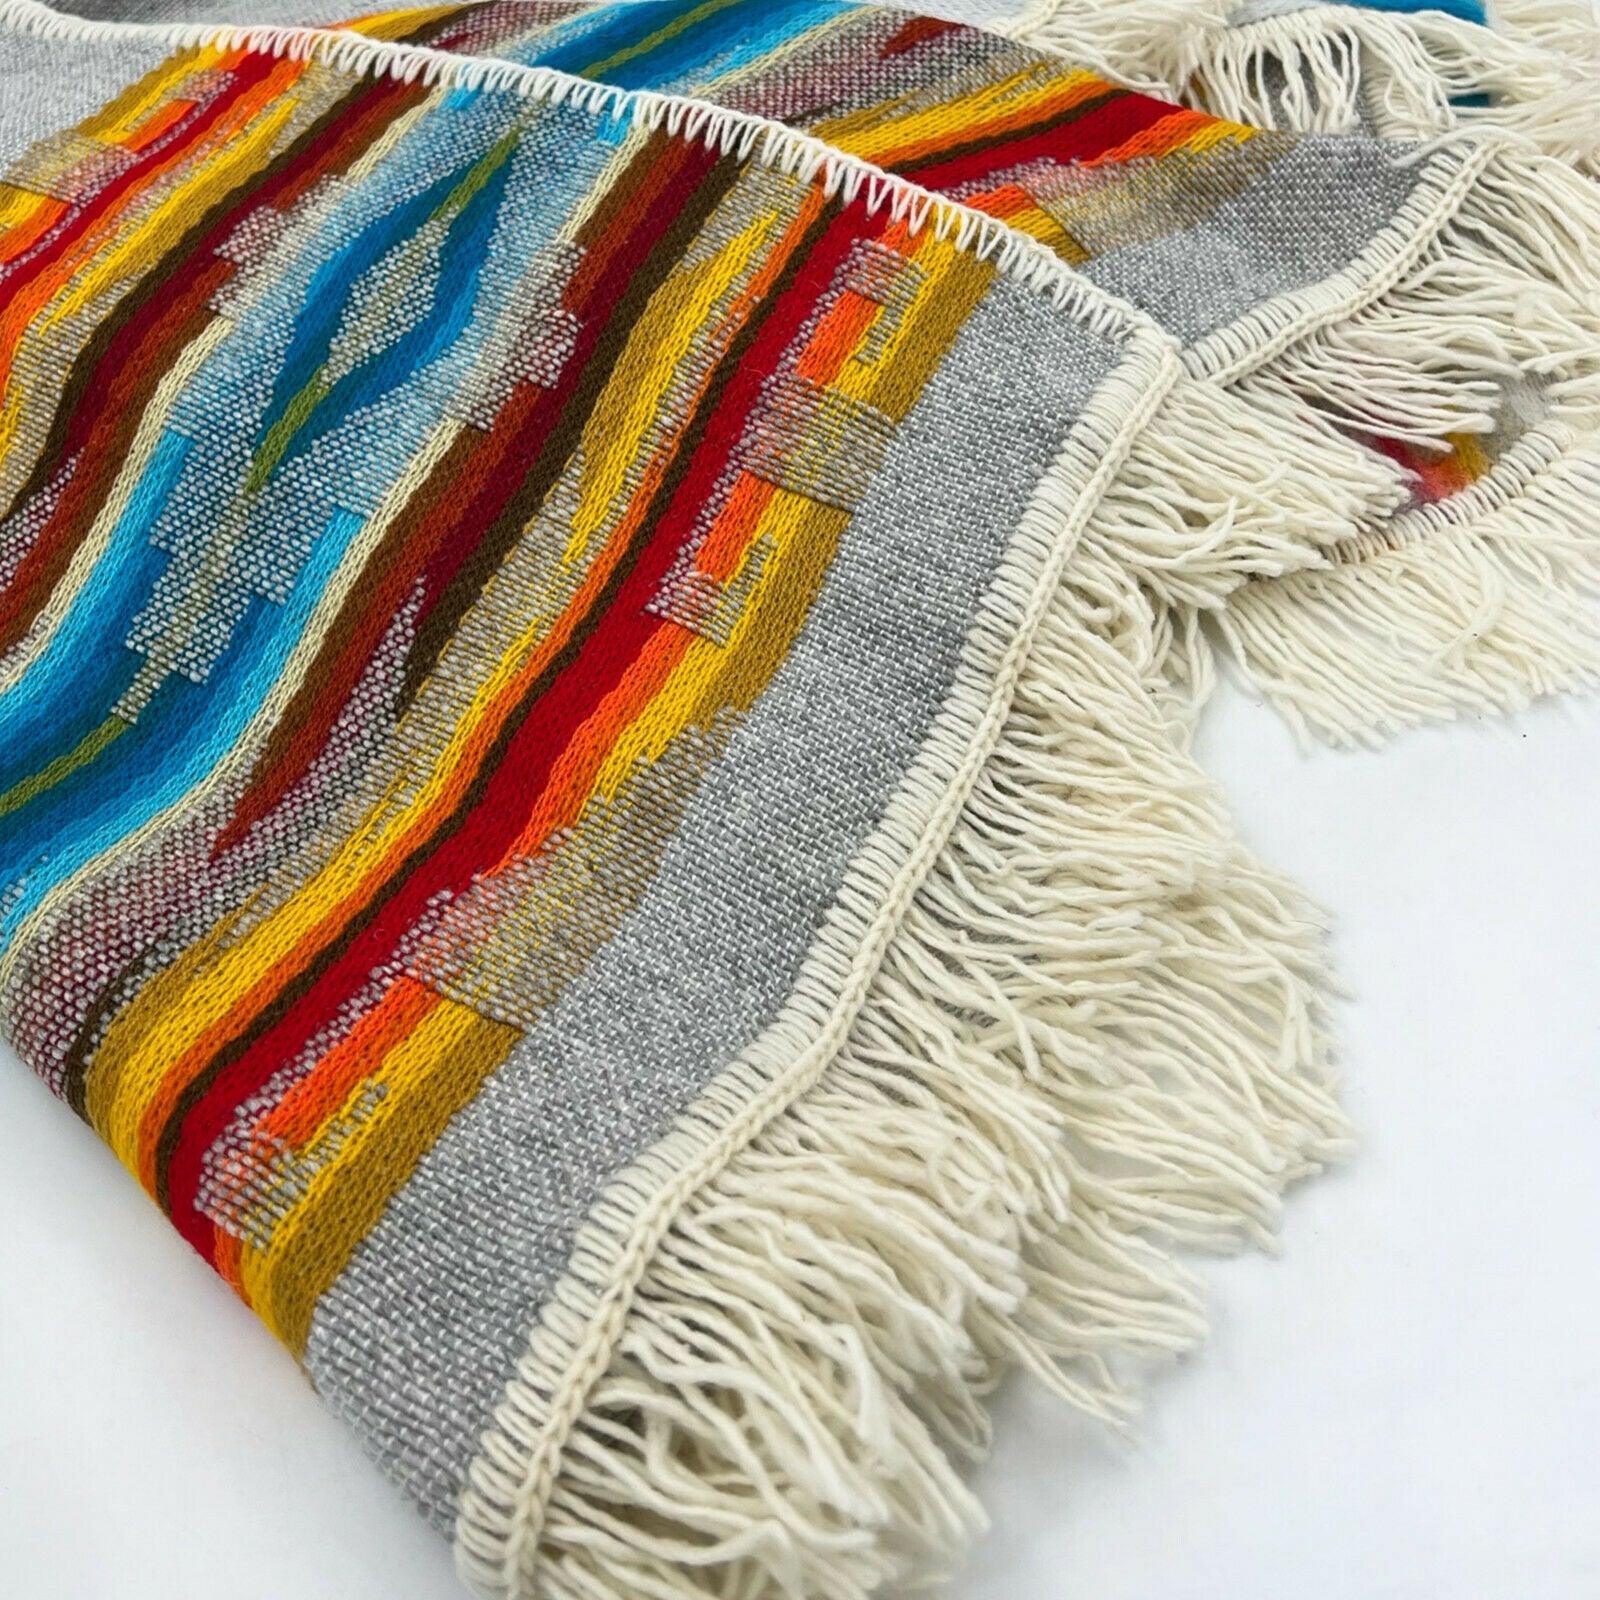 Yapi - Llama wool Unisex Hooded Open Cape Poncho - Authentic South American Aztec pattern - GREY